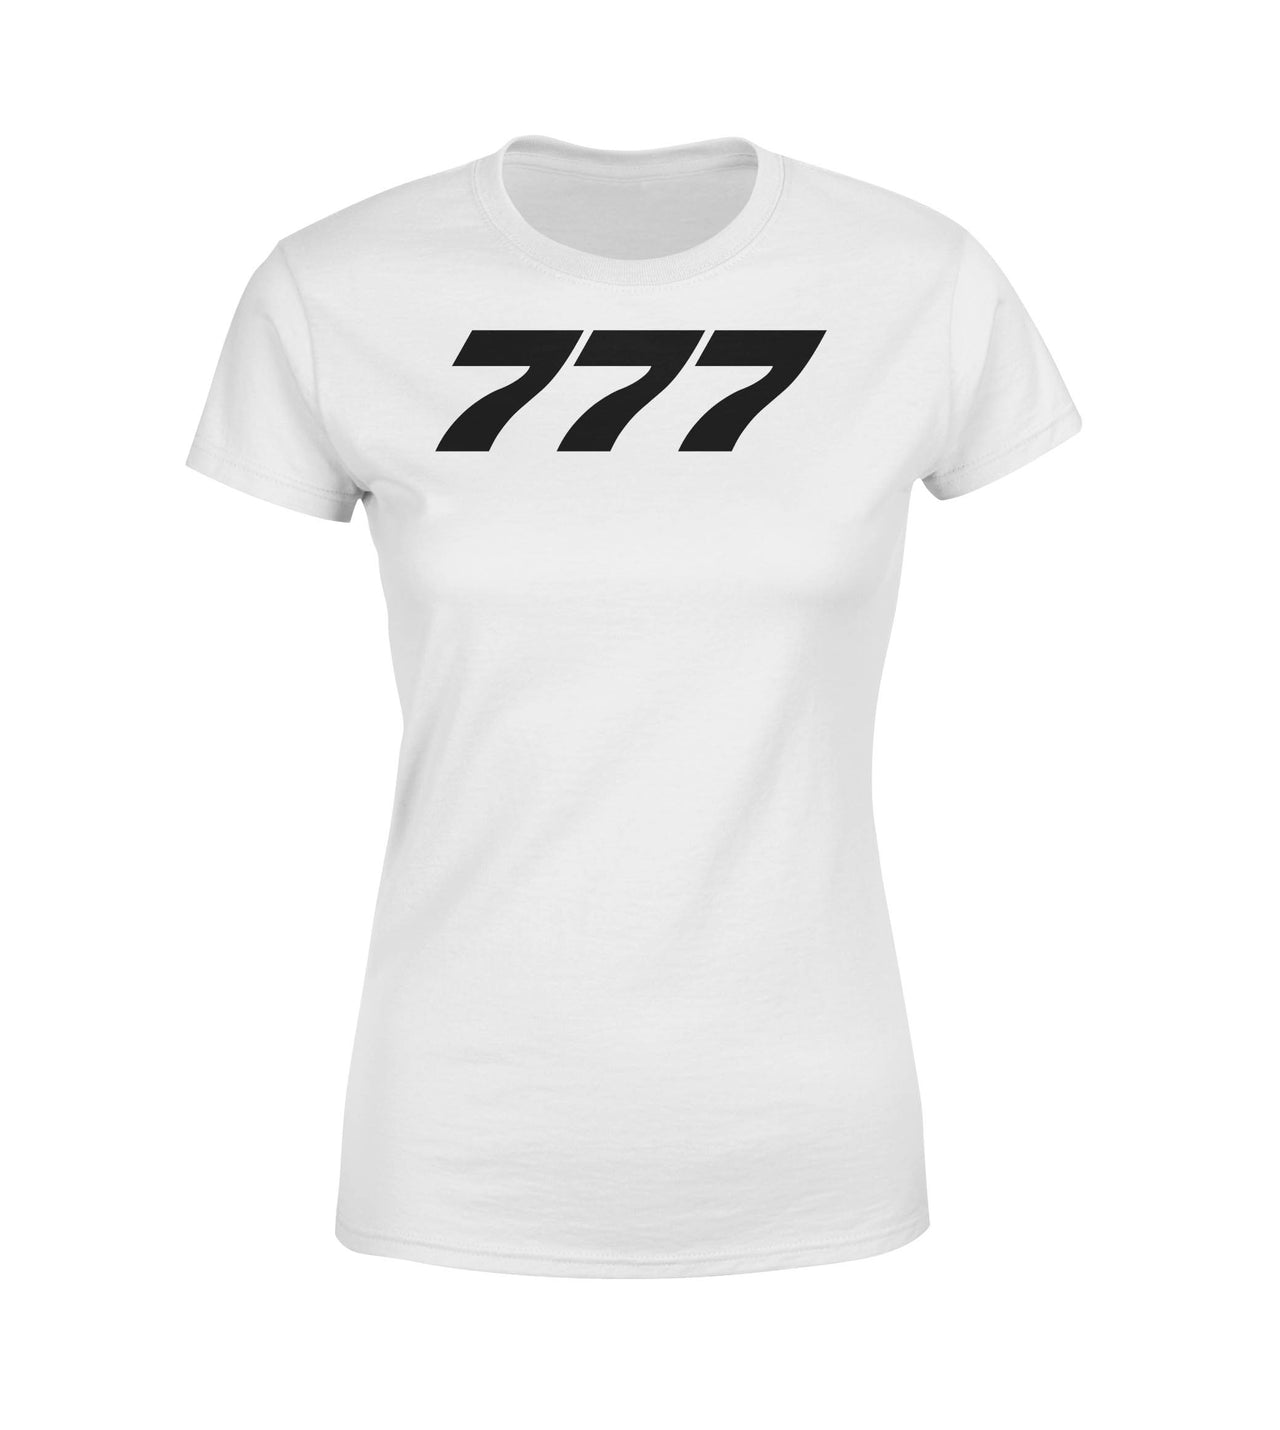 777 Flat Text Designed Women T-Shirts